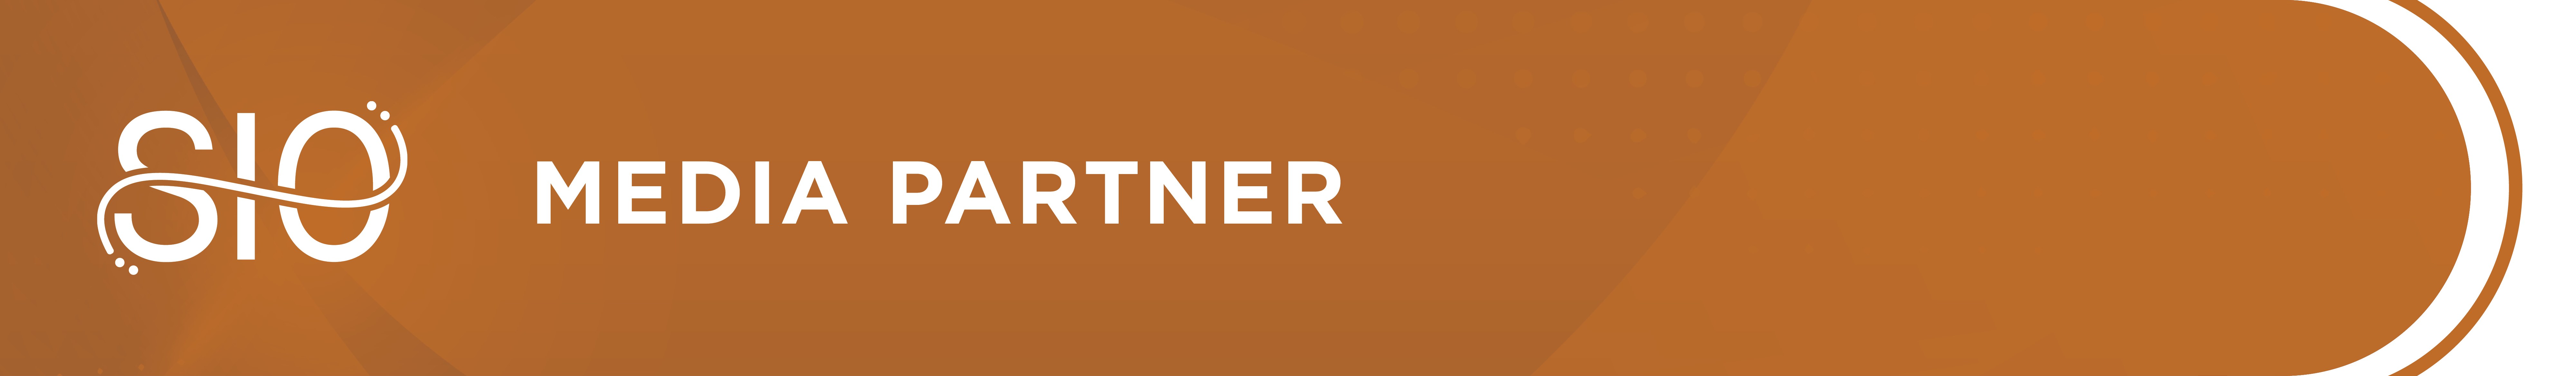 SIO_PartnerBanners